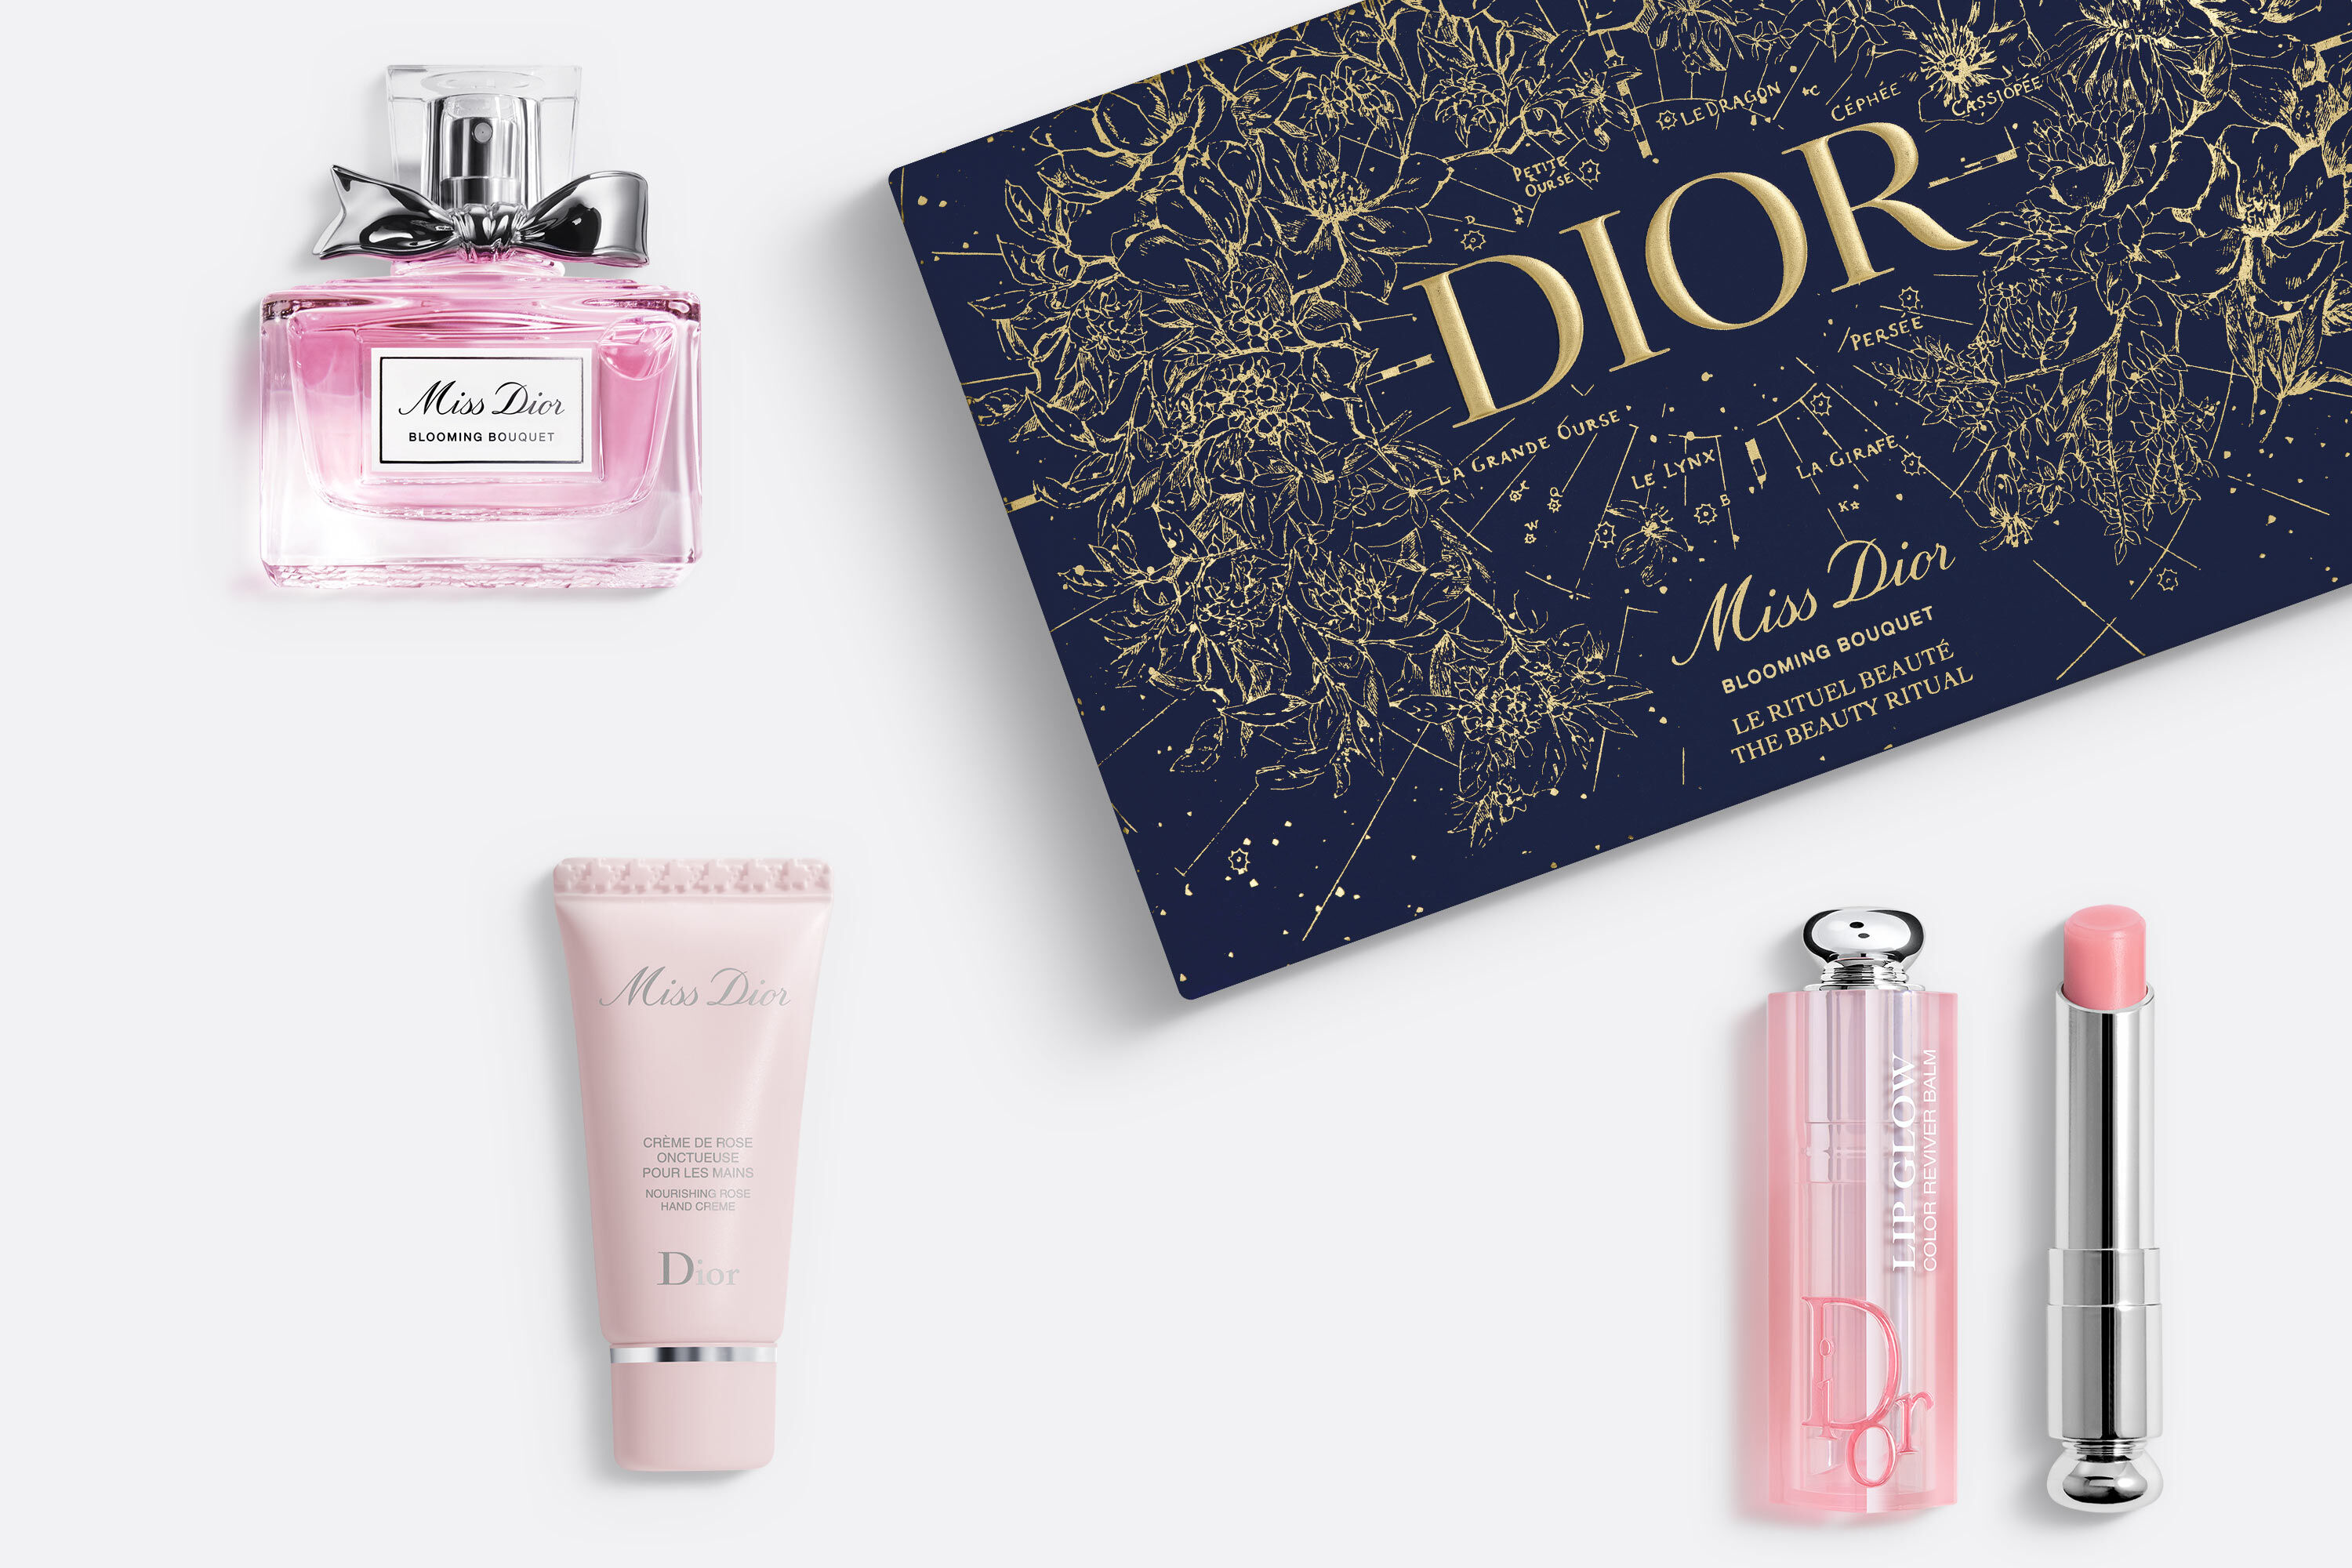 Mua Set Nước Hoa Unisex Dior Fragrance Birthday Gift Set 5ml  10ml  Dior   Mua tại Vua Hàng Hiệu h071719